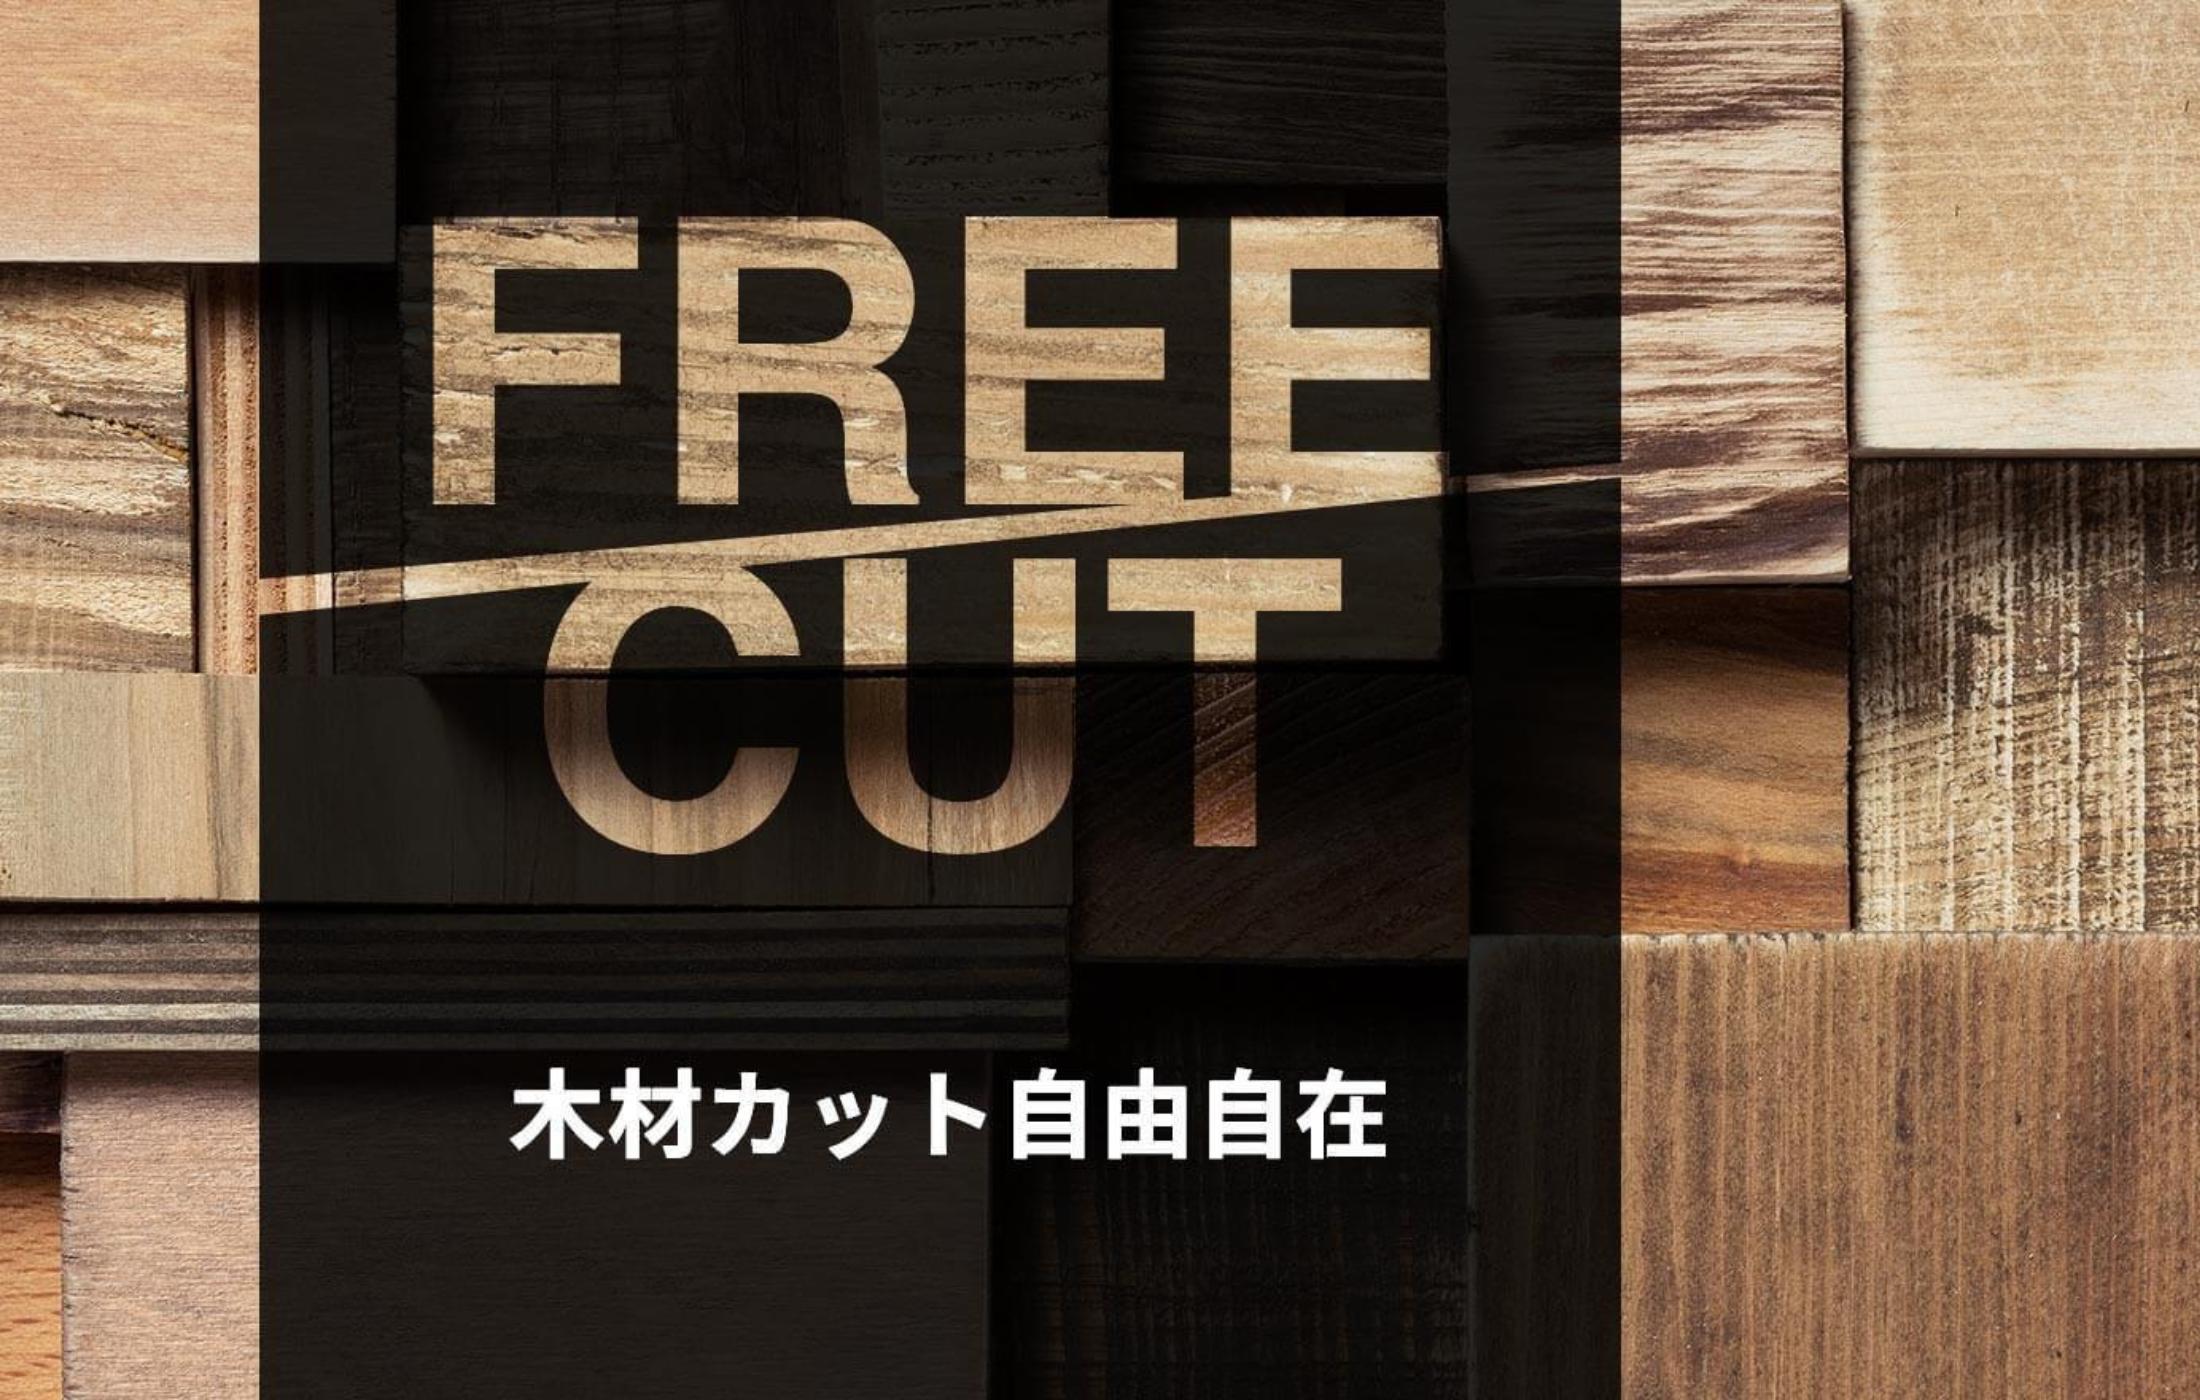 Free cut 木材カット自由自在